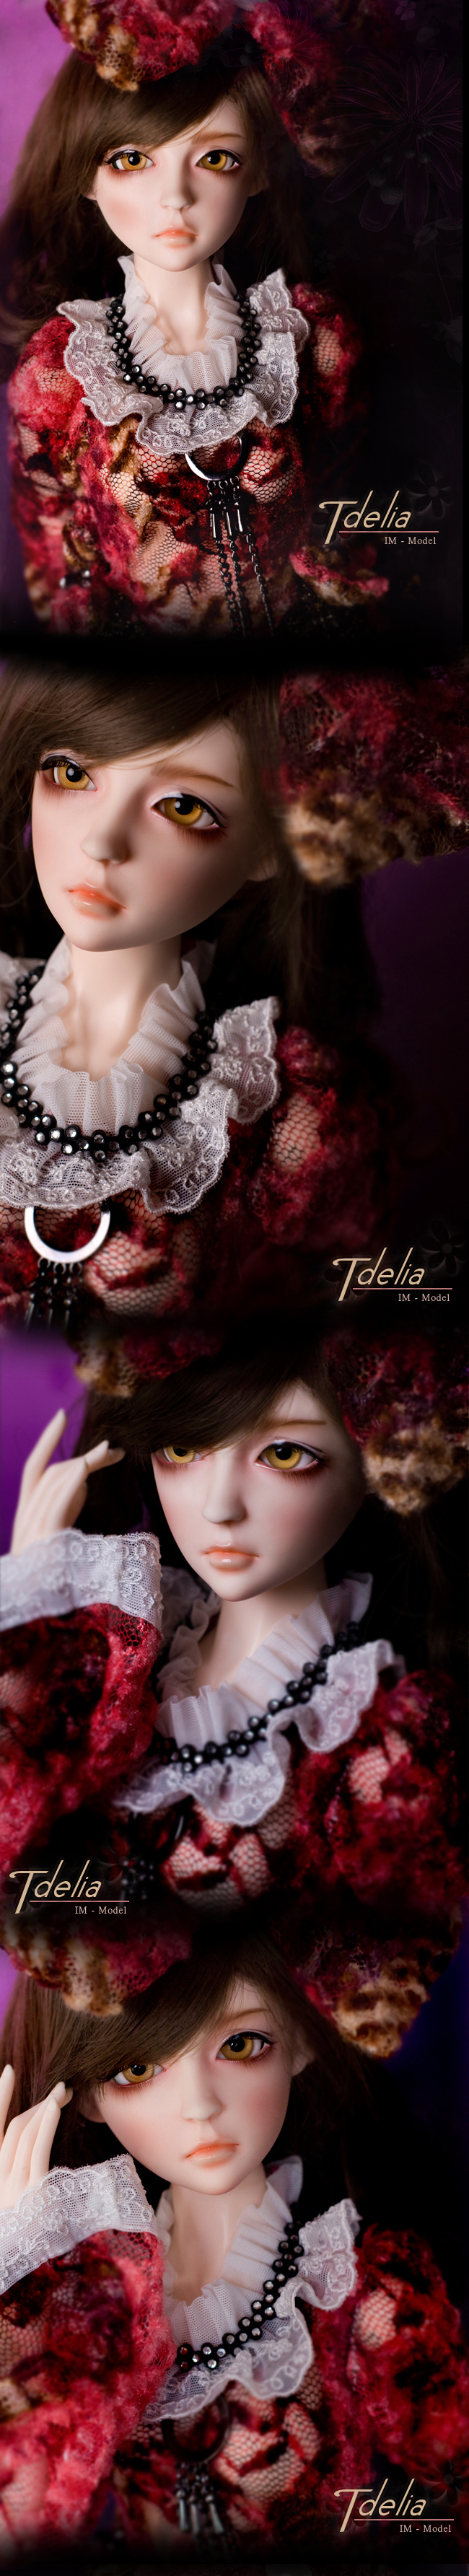 BJD Tdelia 56cm Girl Ball-jointed Doll